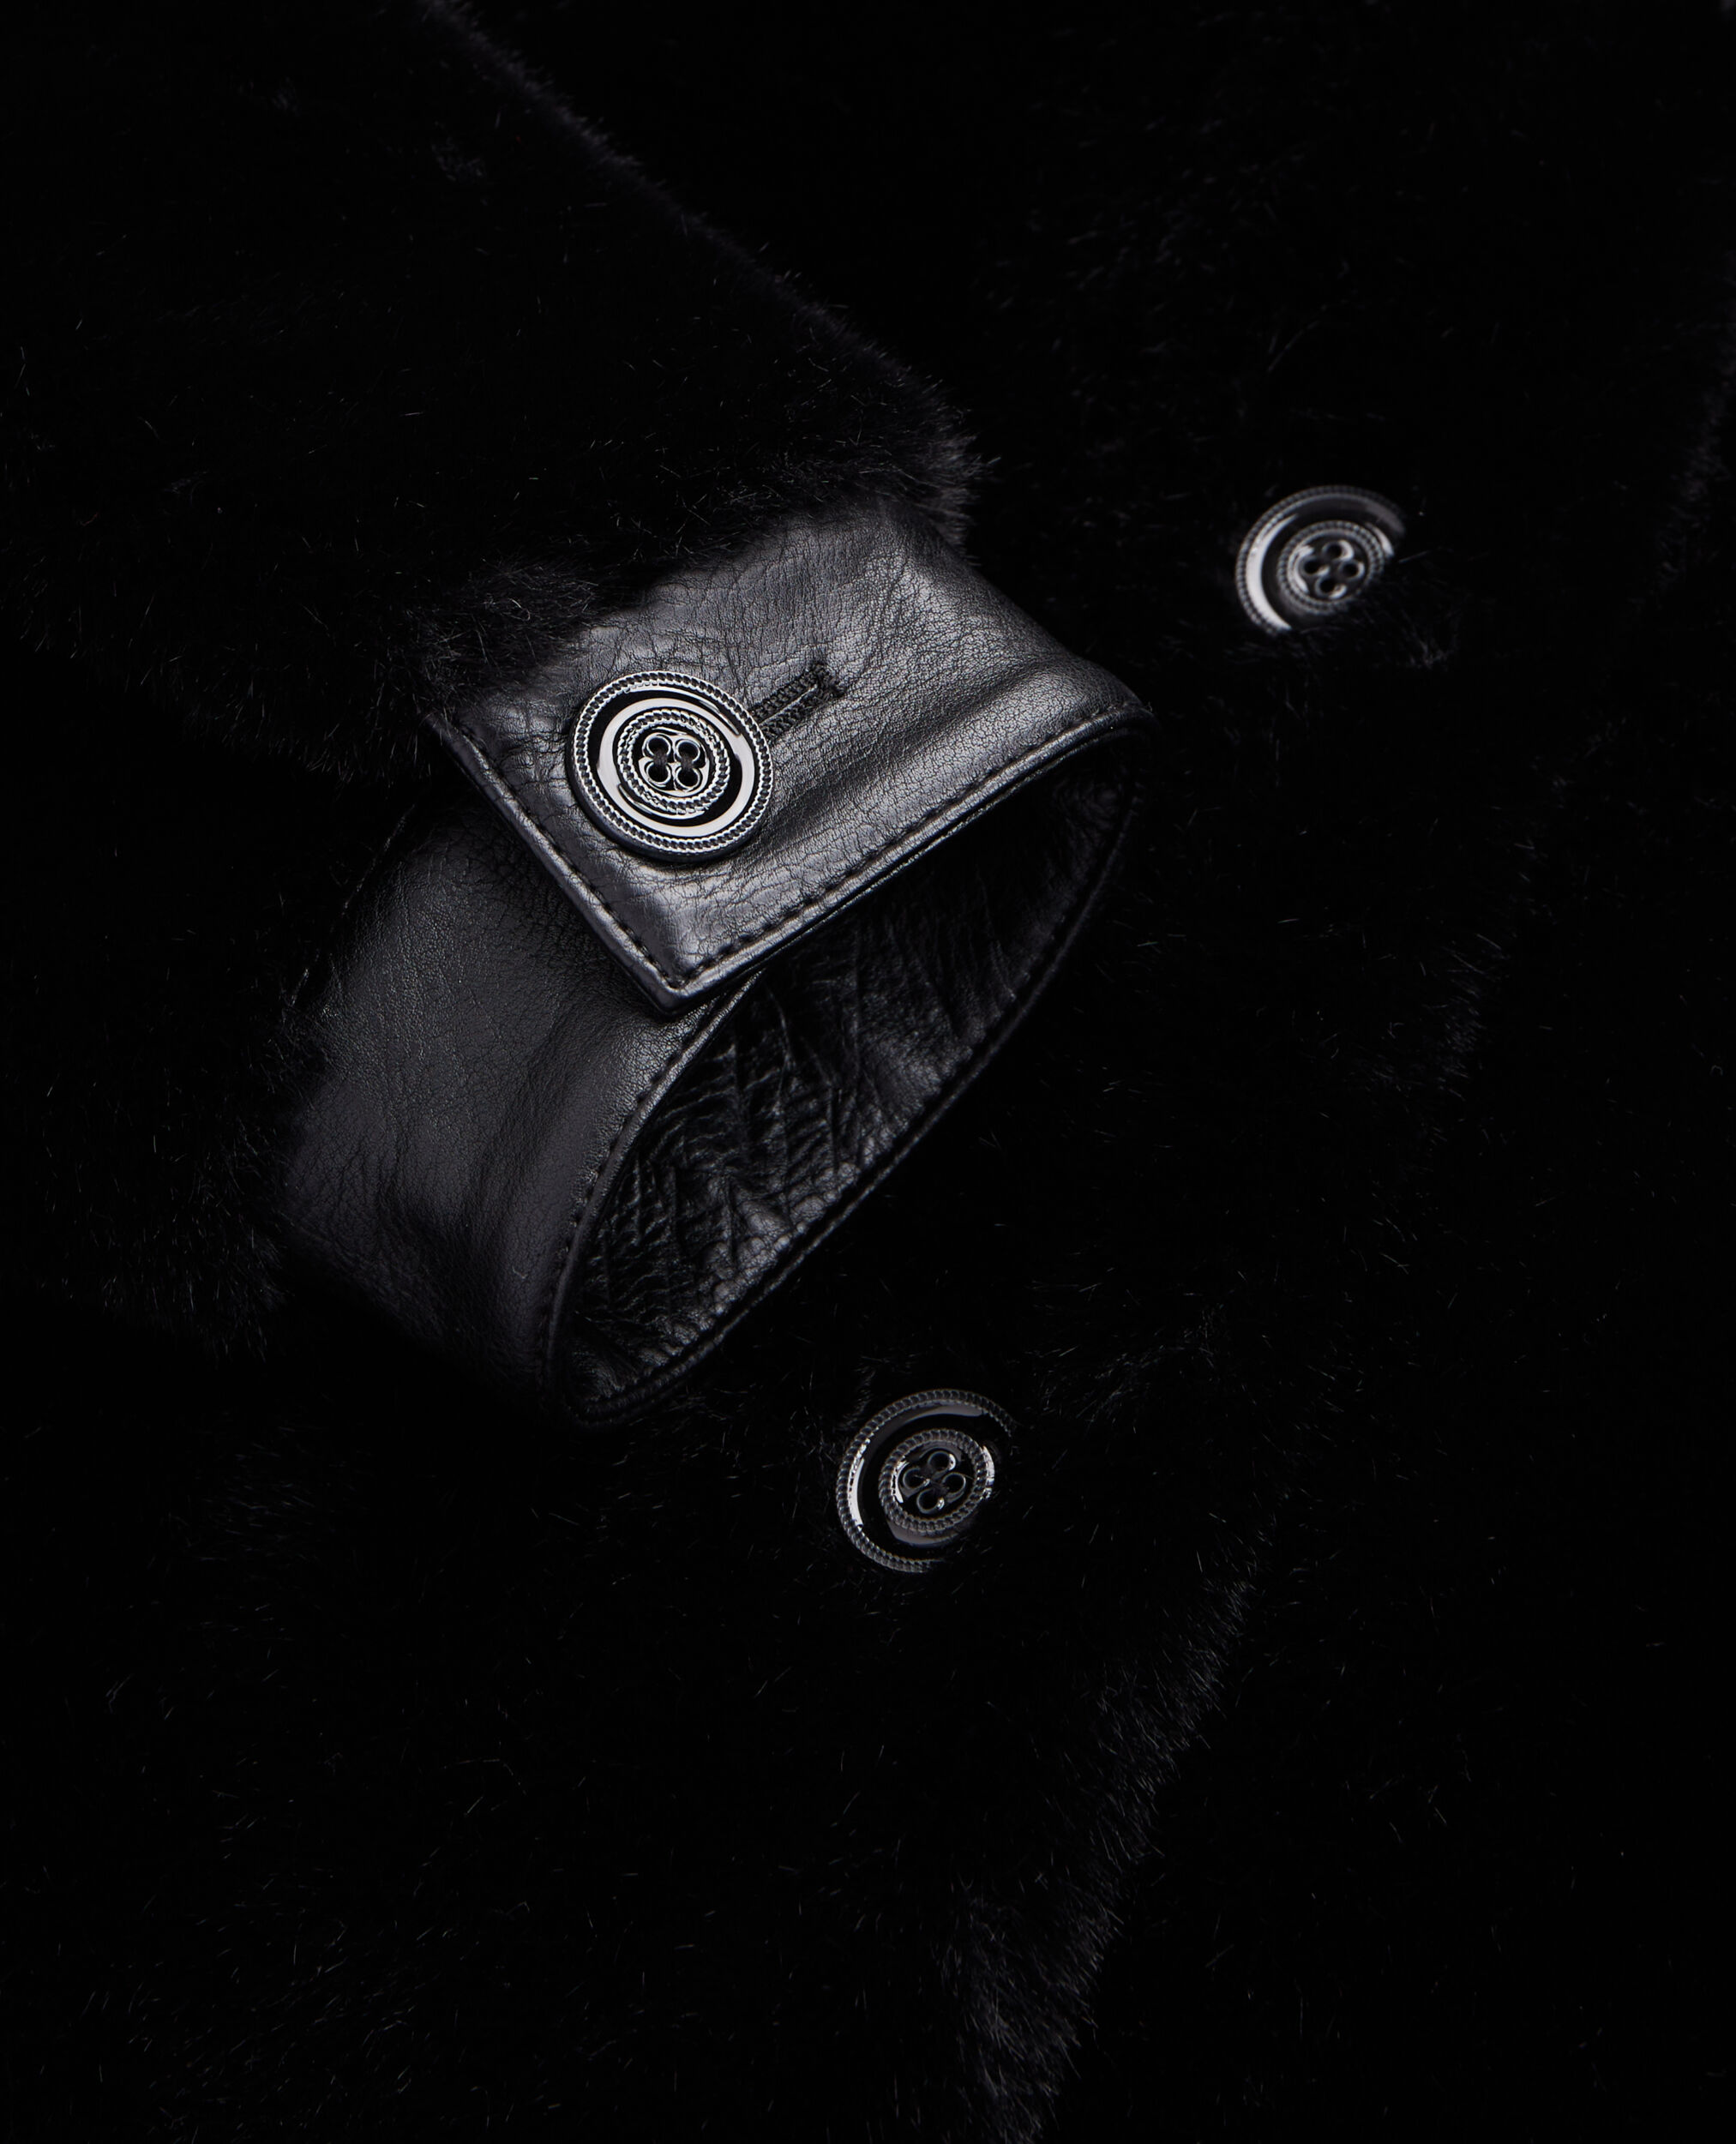 Black faux fur overshirt style jacket, BLACK, hi-res image number null